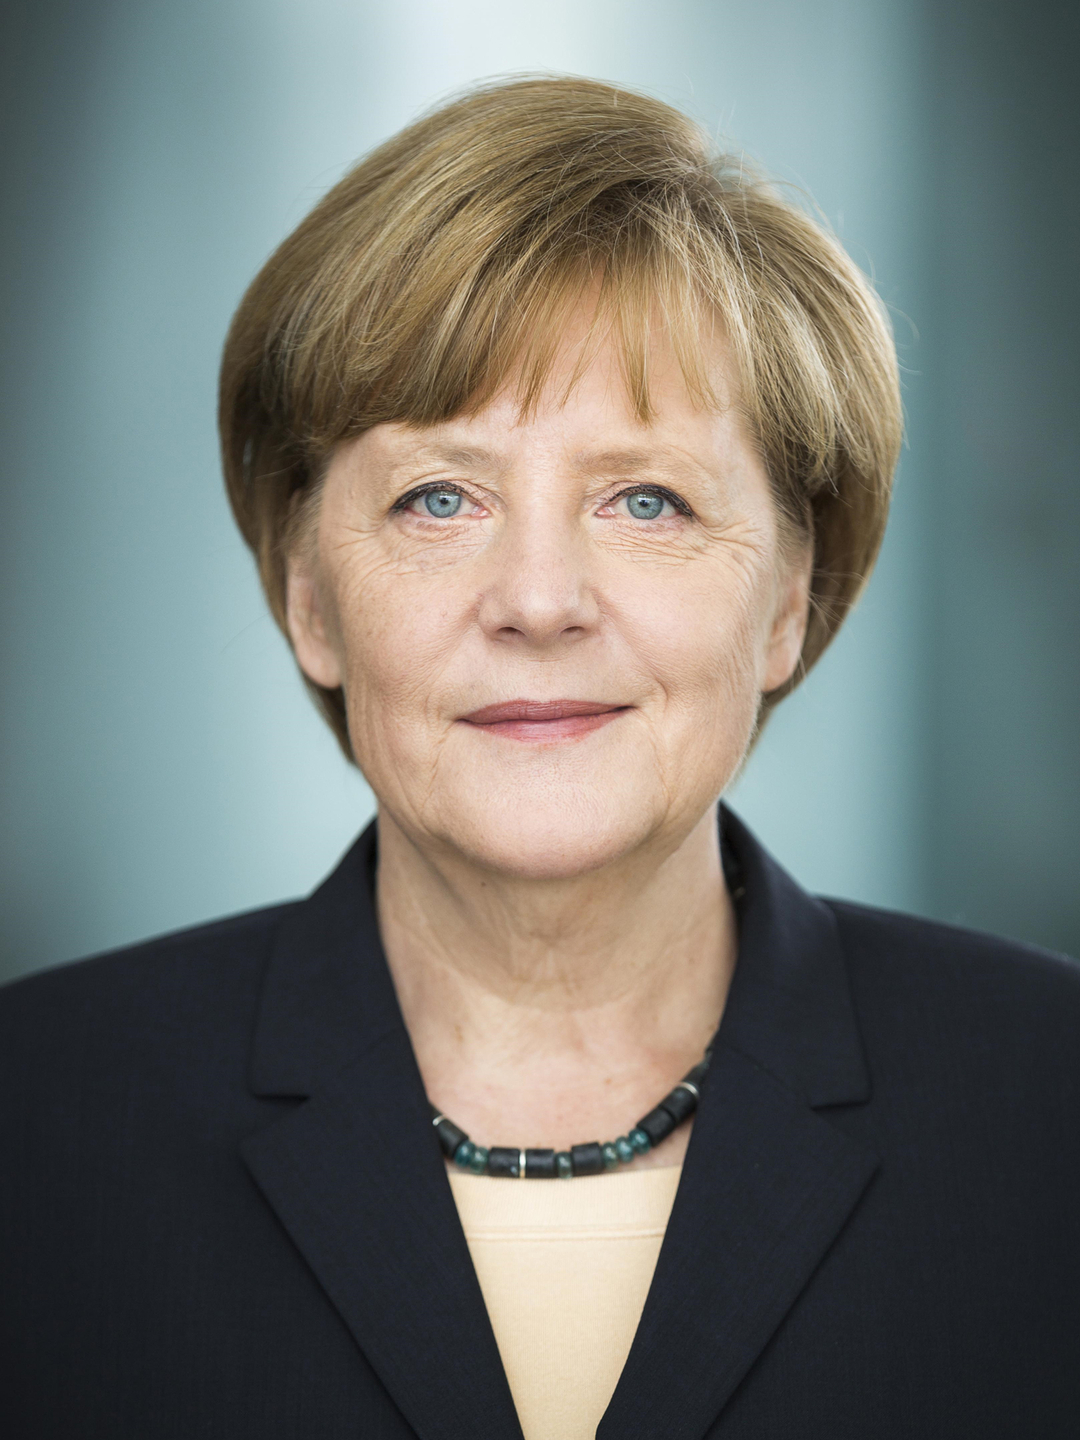 Angela Merkel young age